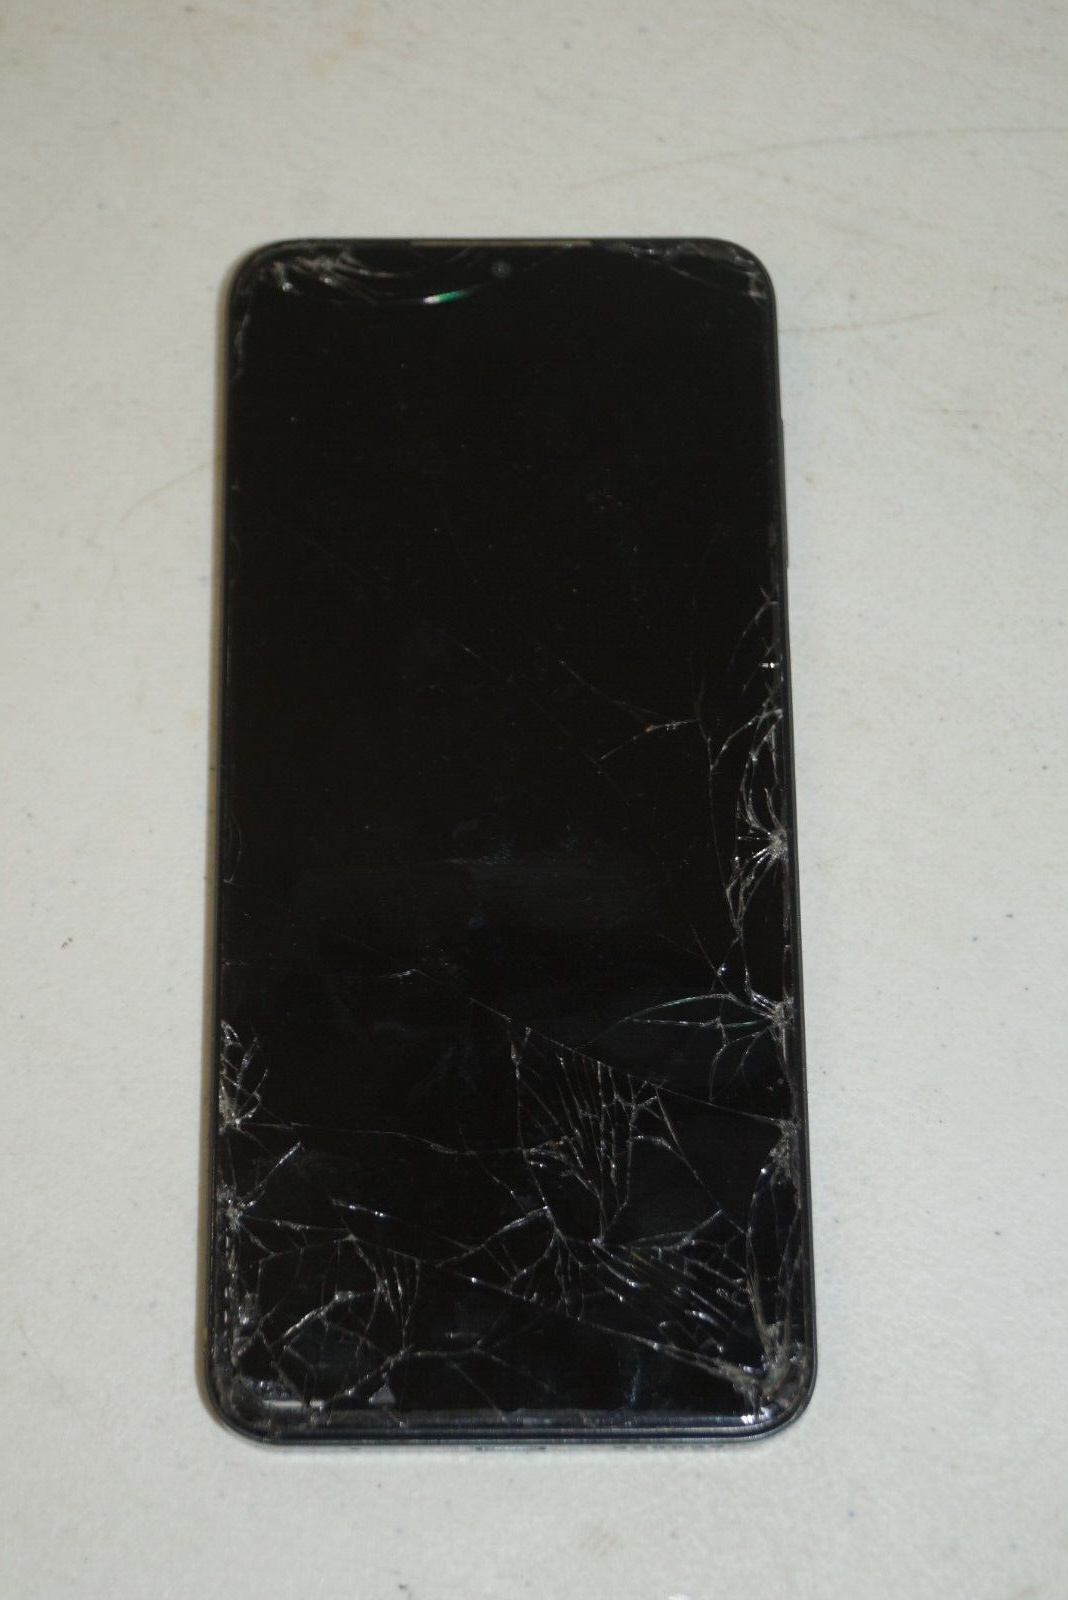 FOR PARTS NOT WORKING - T-Mobile Revvl V 32GB Metro PCS Black Cell Phone - $19.79